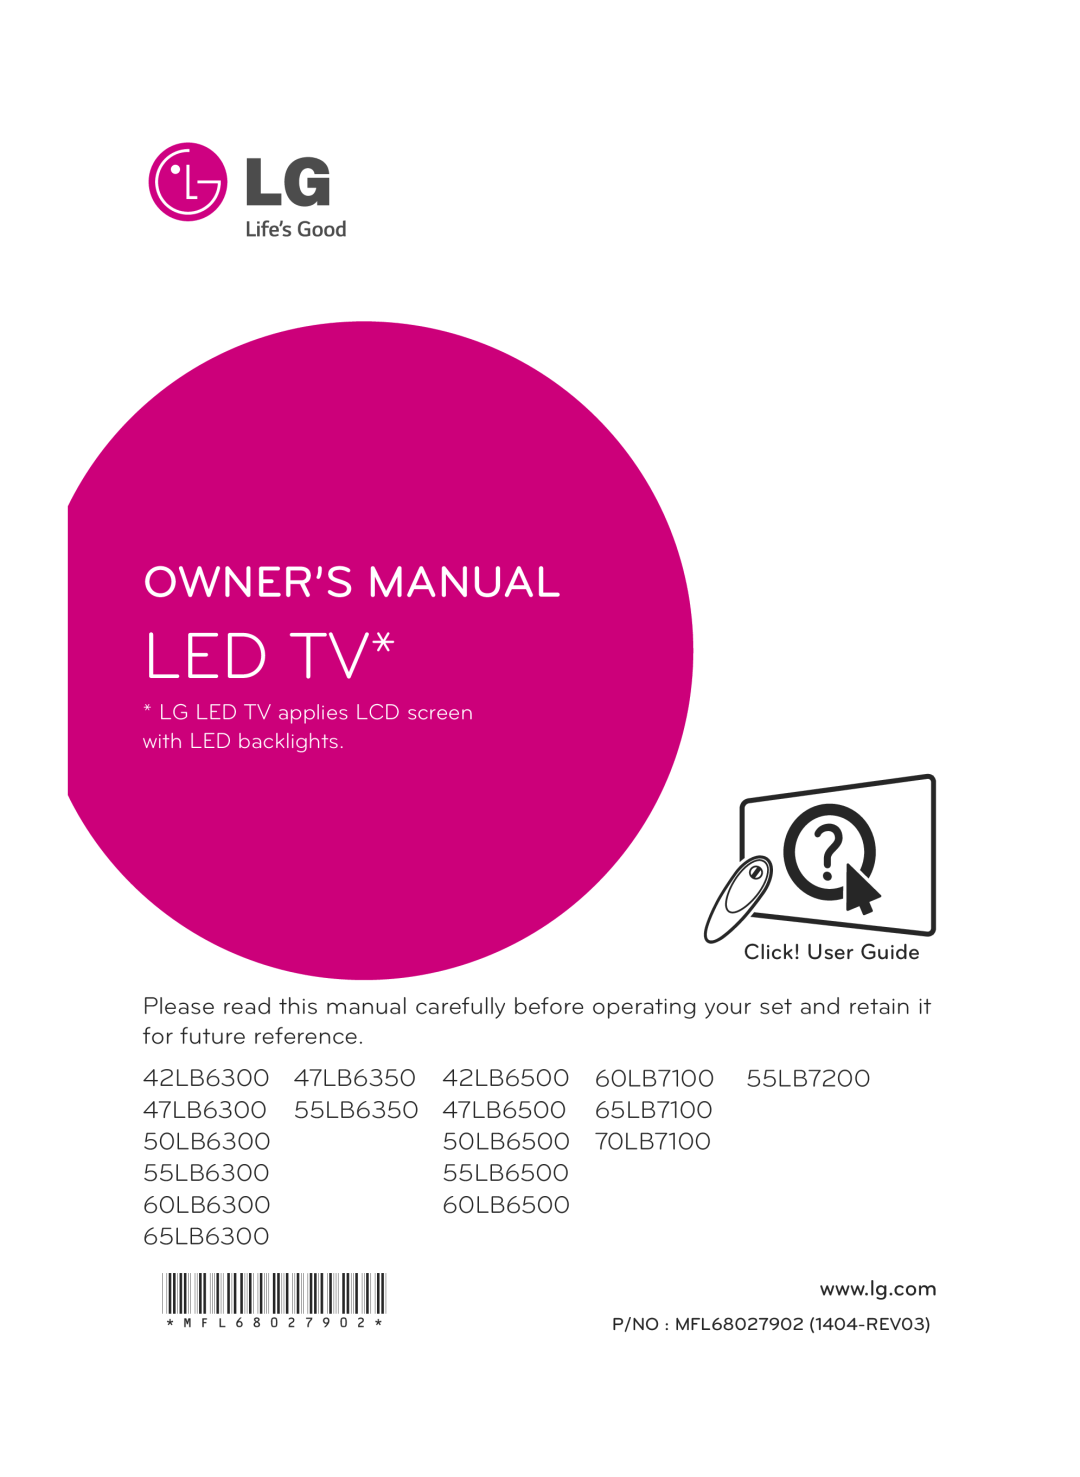 LG Electronics 50LB6300 owner manual Led Tv, MFL68027902, Owner’S Manual 